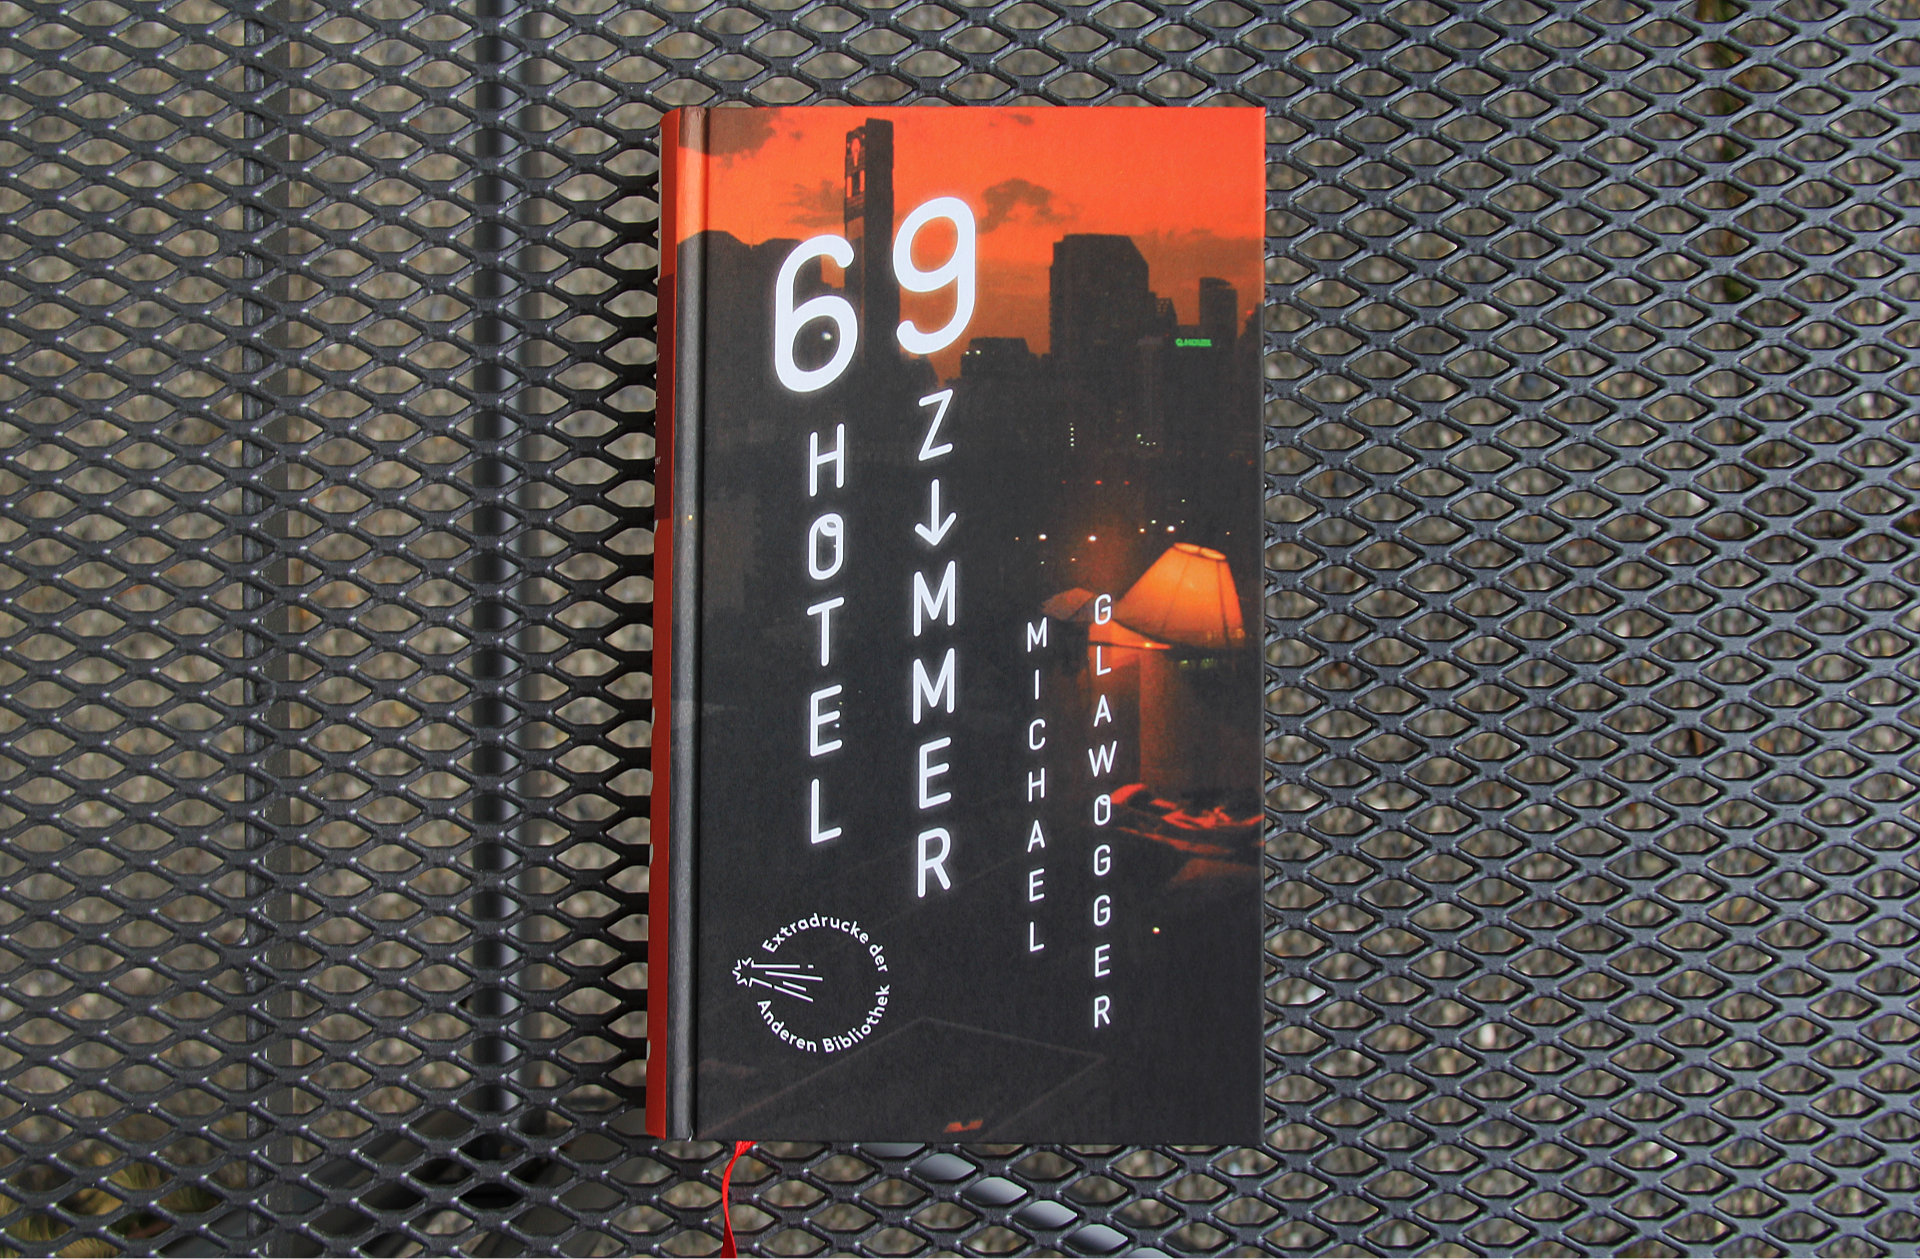 69 Hotelzimmer • Michael Glawogger